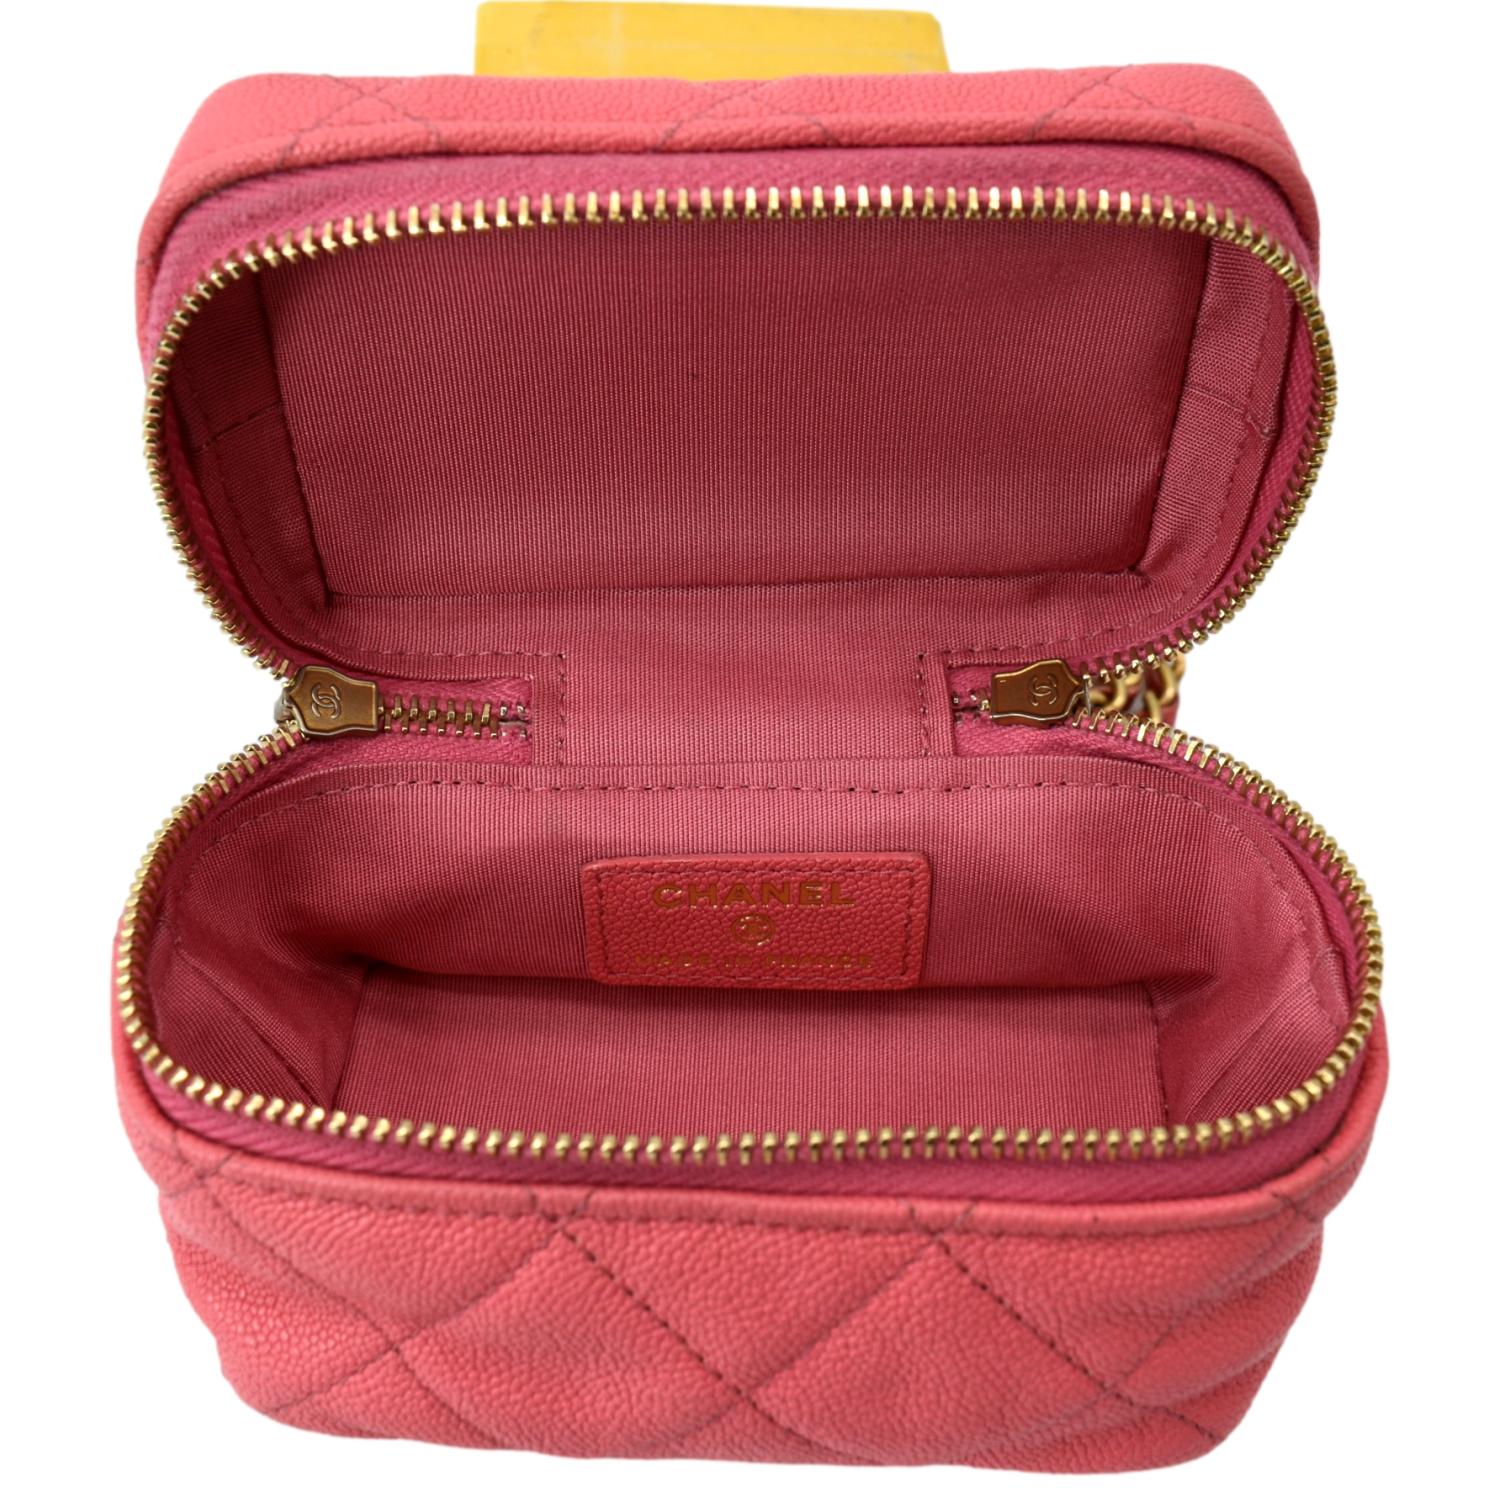 Trendy cc vanity leather handbag Chanel Pink in Leather - 38997571